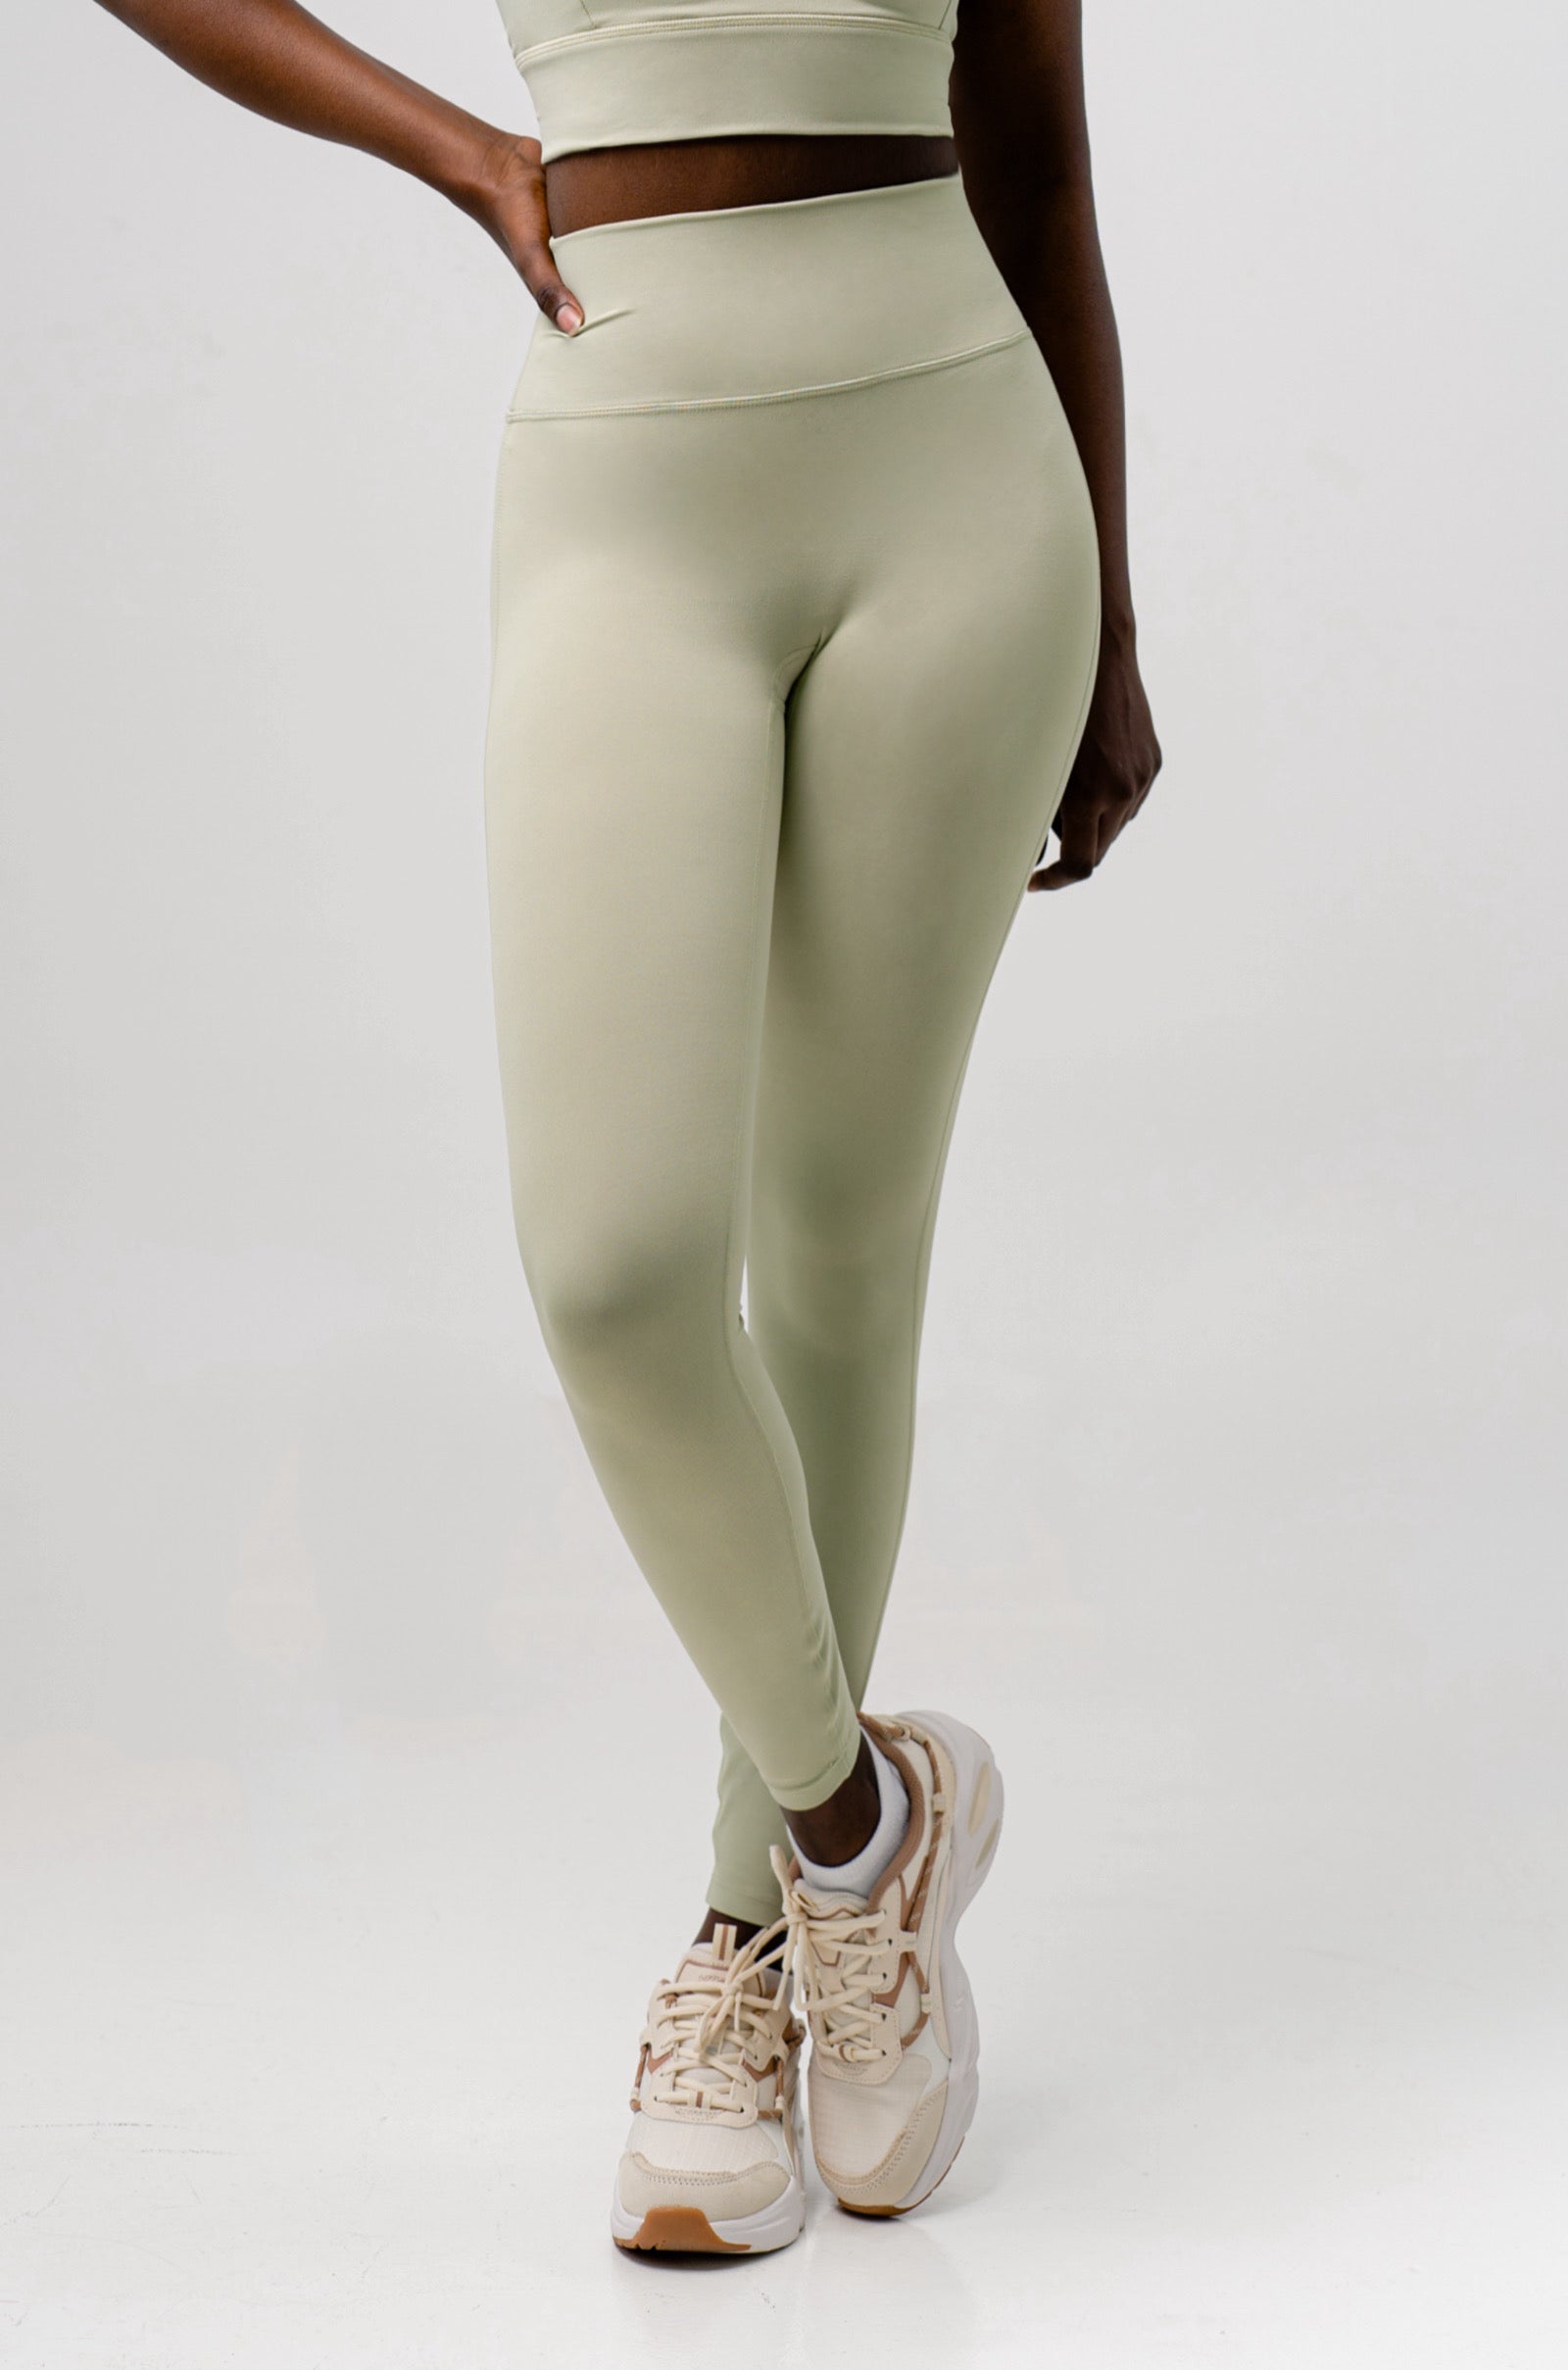 Women's wide yoga pants - Vinyasa - Olive green